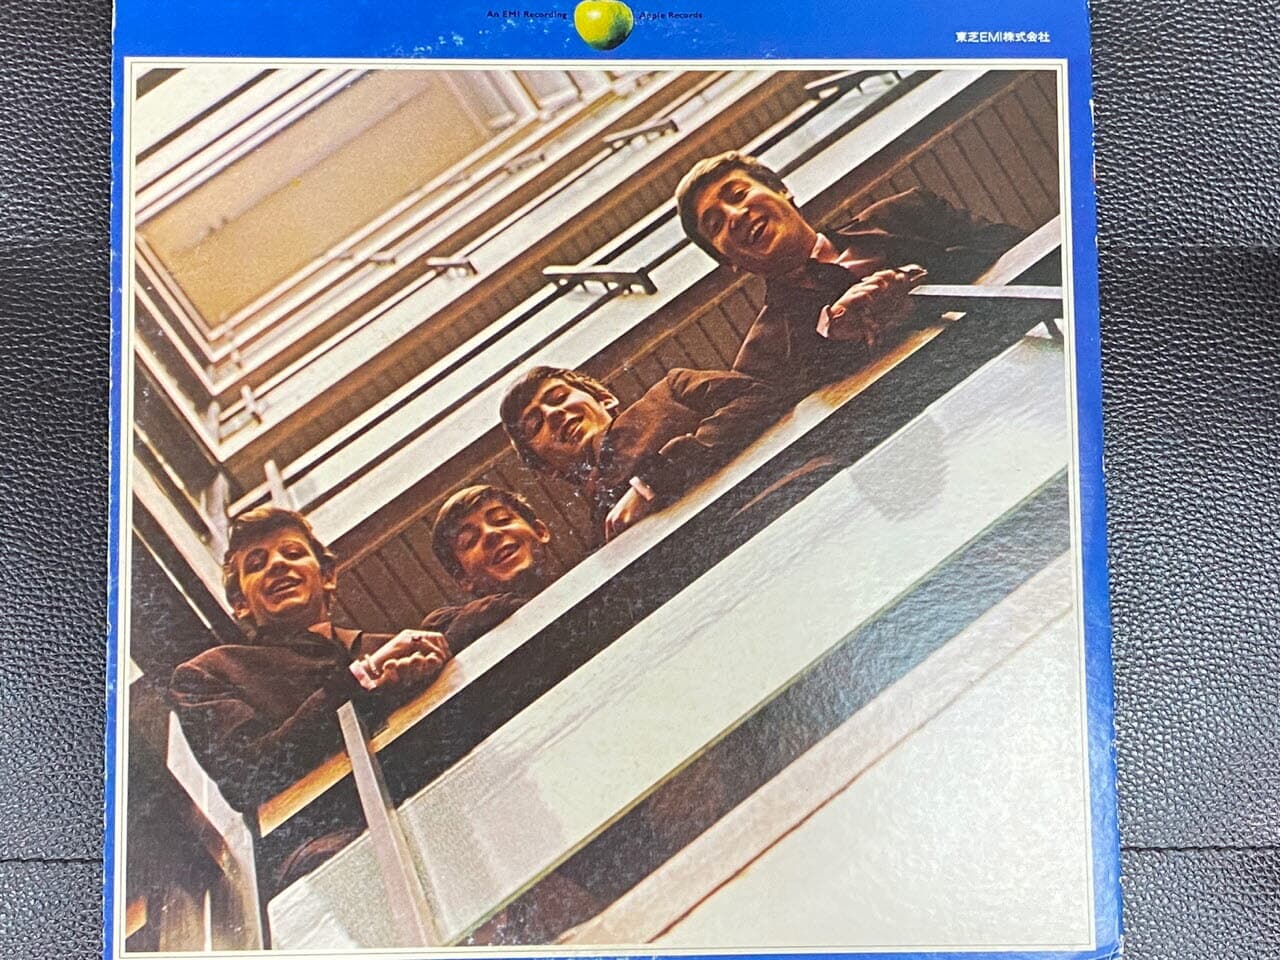 [LP] 비틀스 - The Beatles - 1967-1970 (Blue Album) 2Lps [일본반]